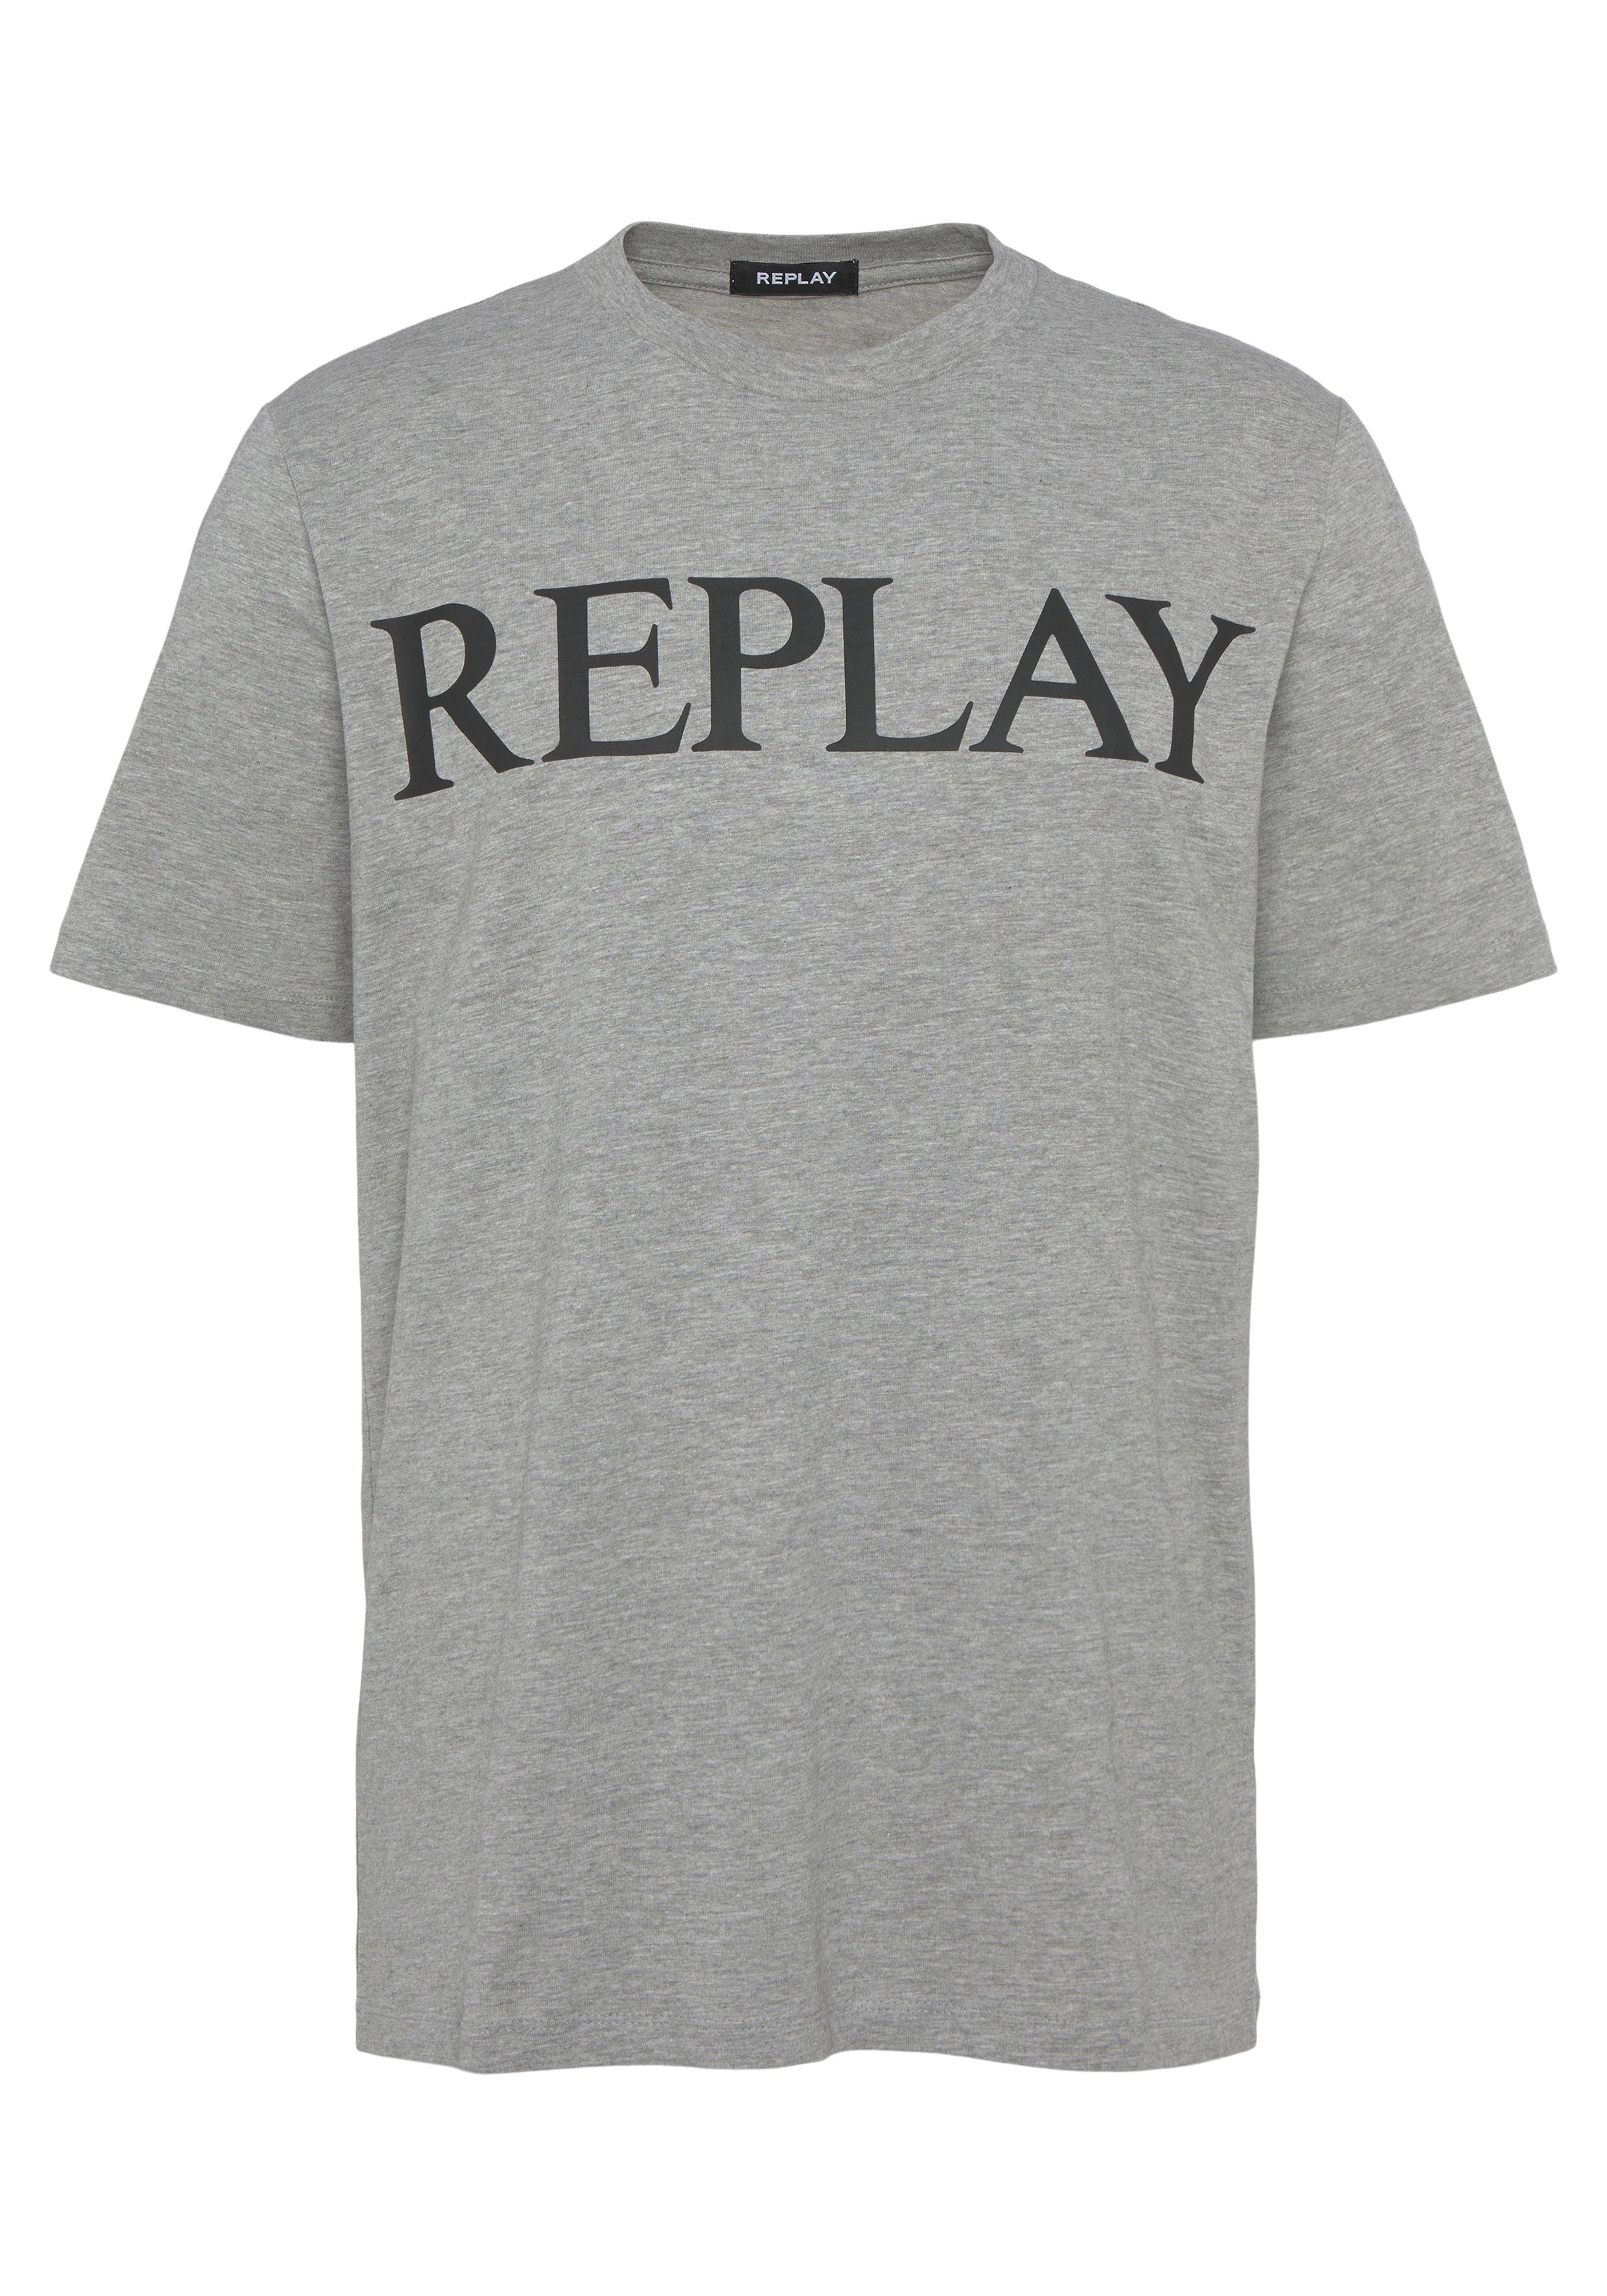 Replay T-Shirt light grey melange